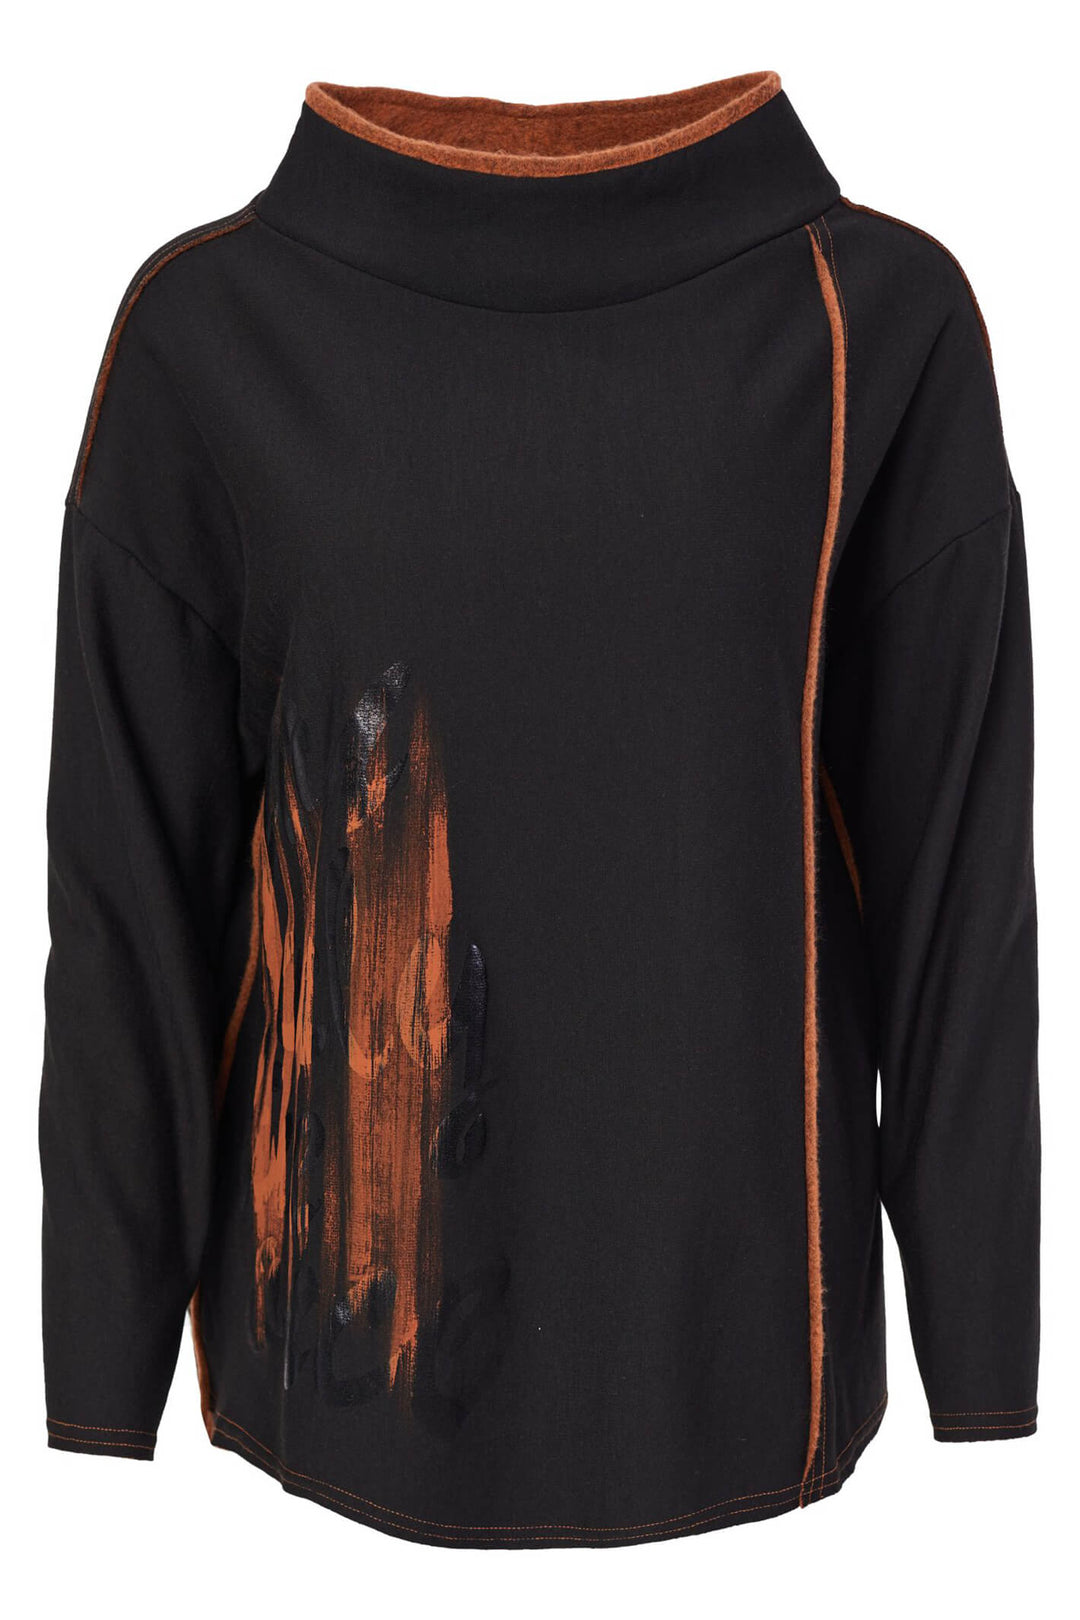 Naya NAW23 211 Black Orange High Neck Long Sleeve Top - Experience Boutique